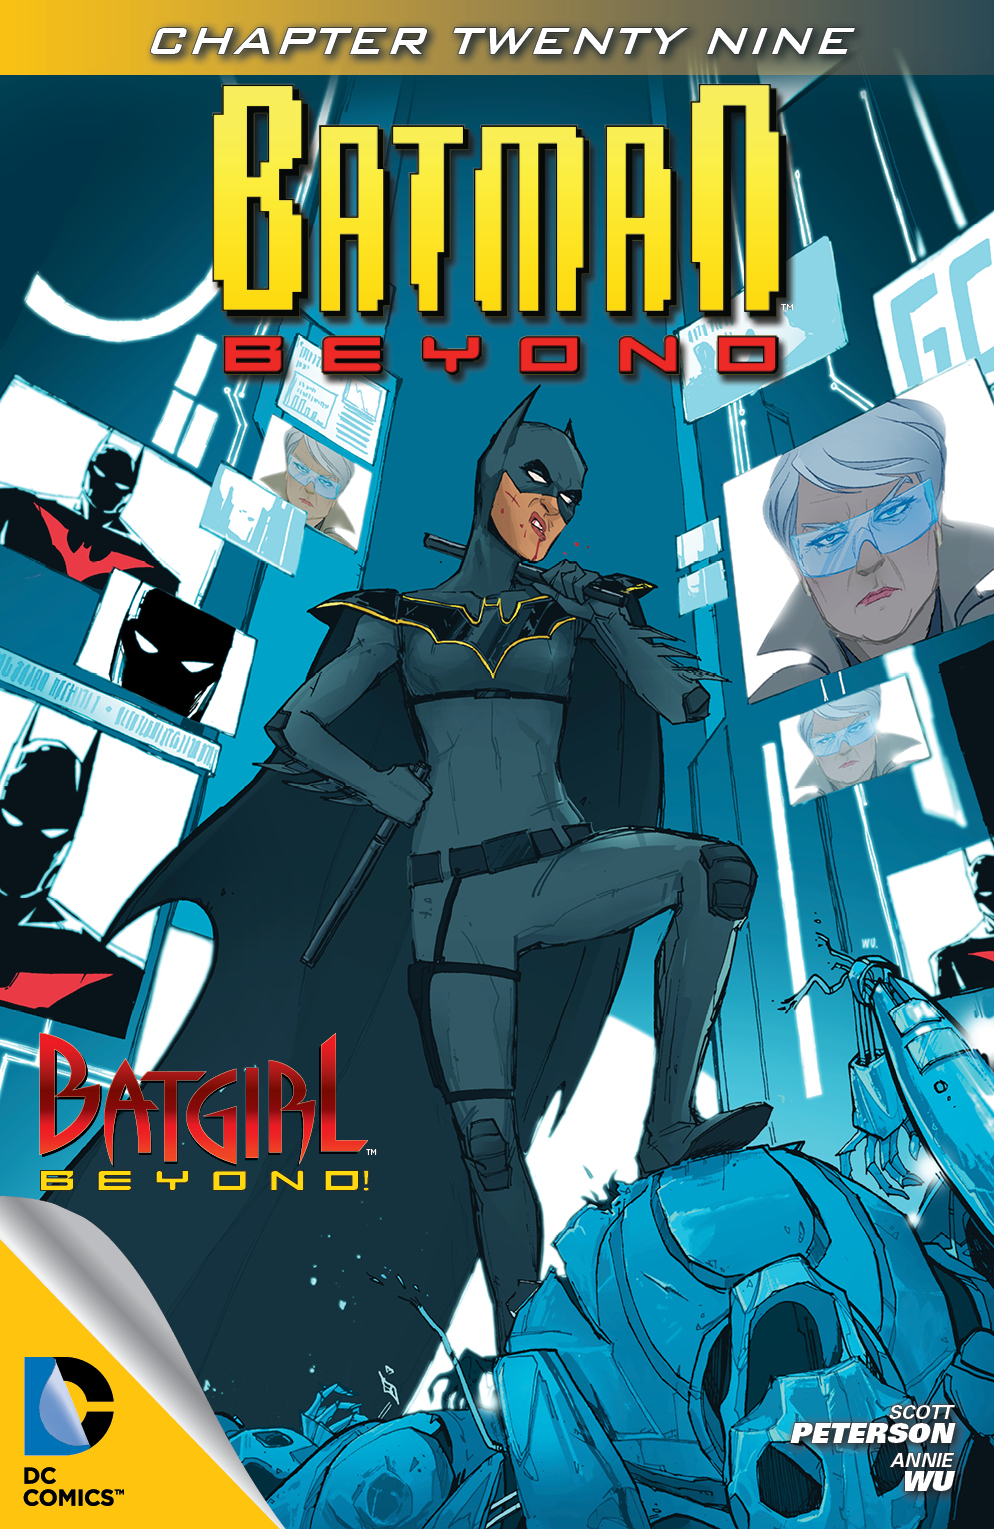 Batman Beyond (2012-) #29 preview images